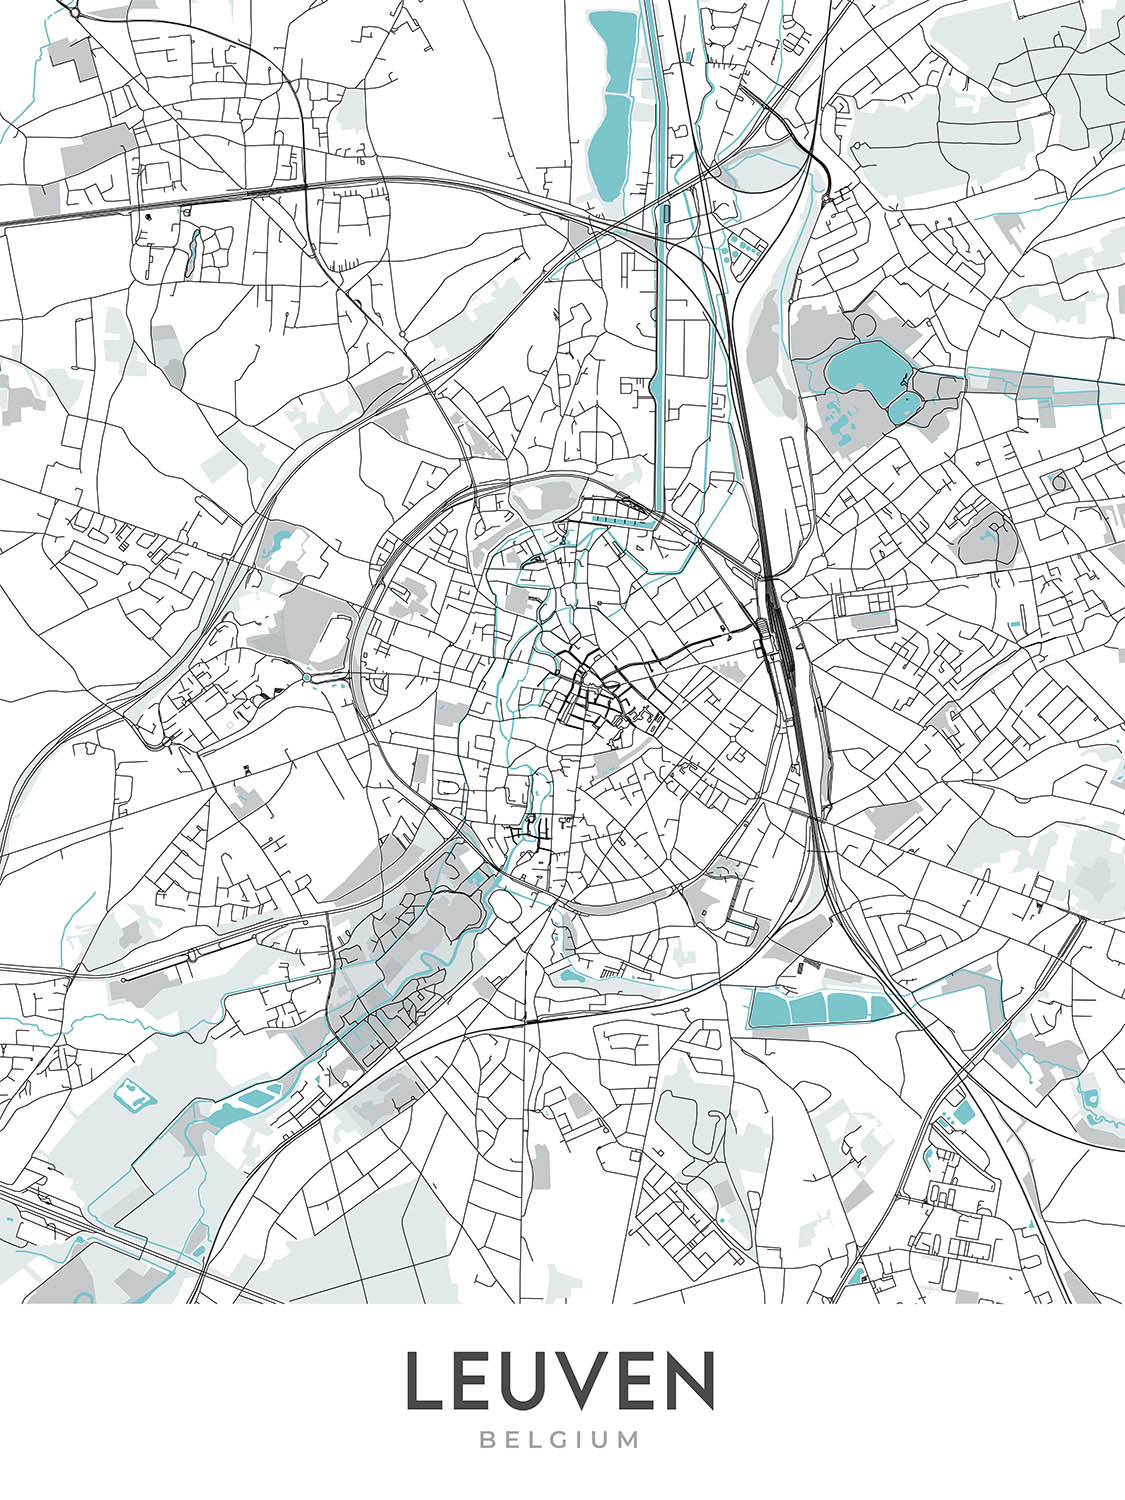 Modern City Map of Leuven, Belgium: Town Hall, University, Botanical Garden, E40, A2